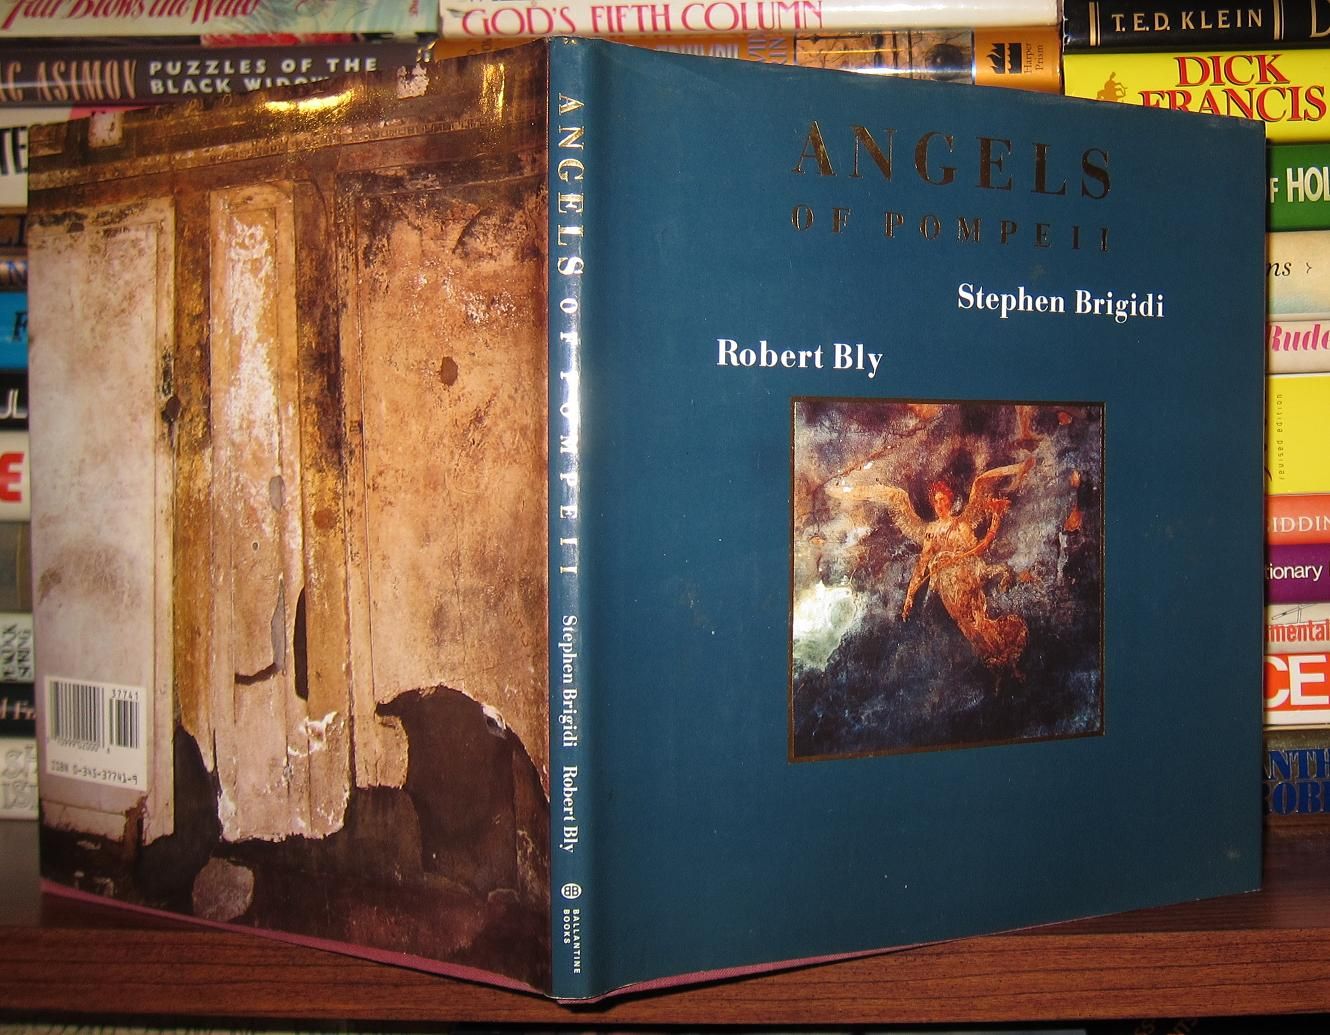 BLY, ROBERT; BRIGIDI, STEPHEN - Angels of Pompeii